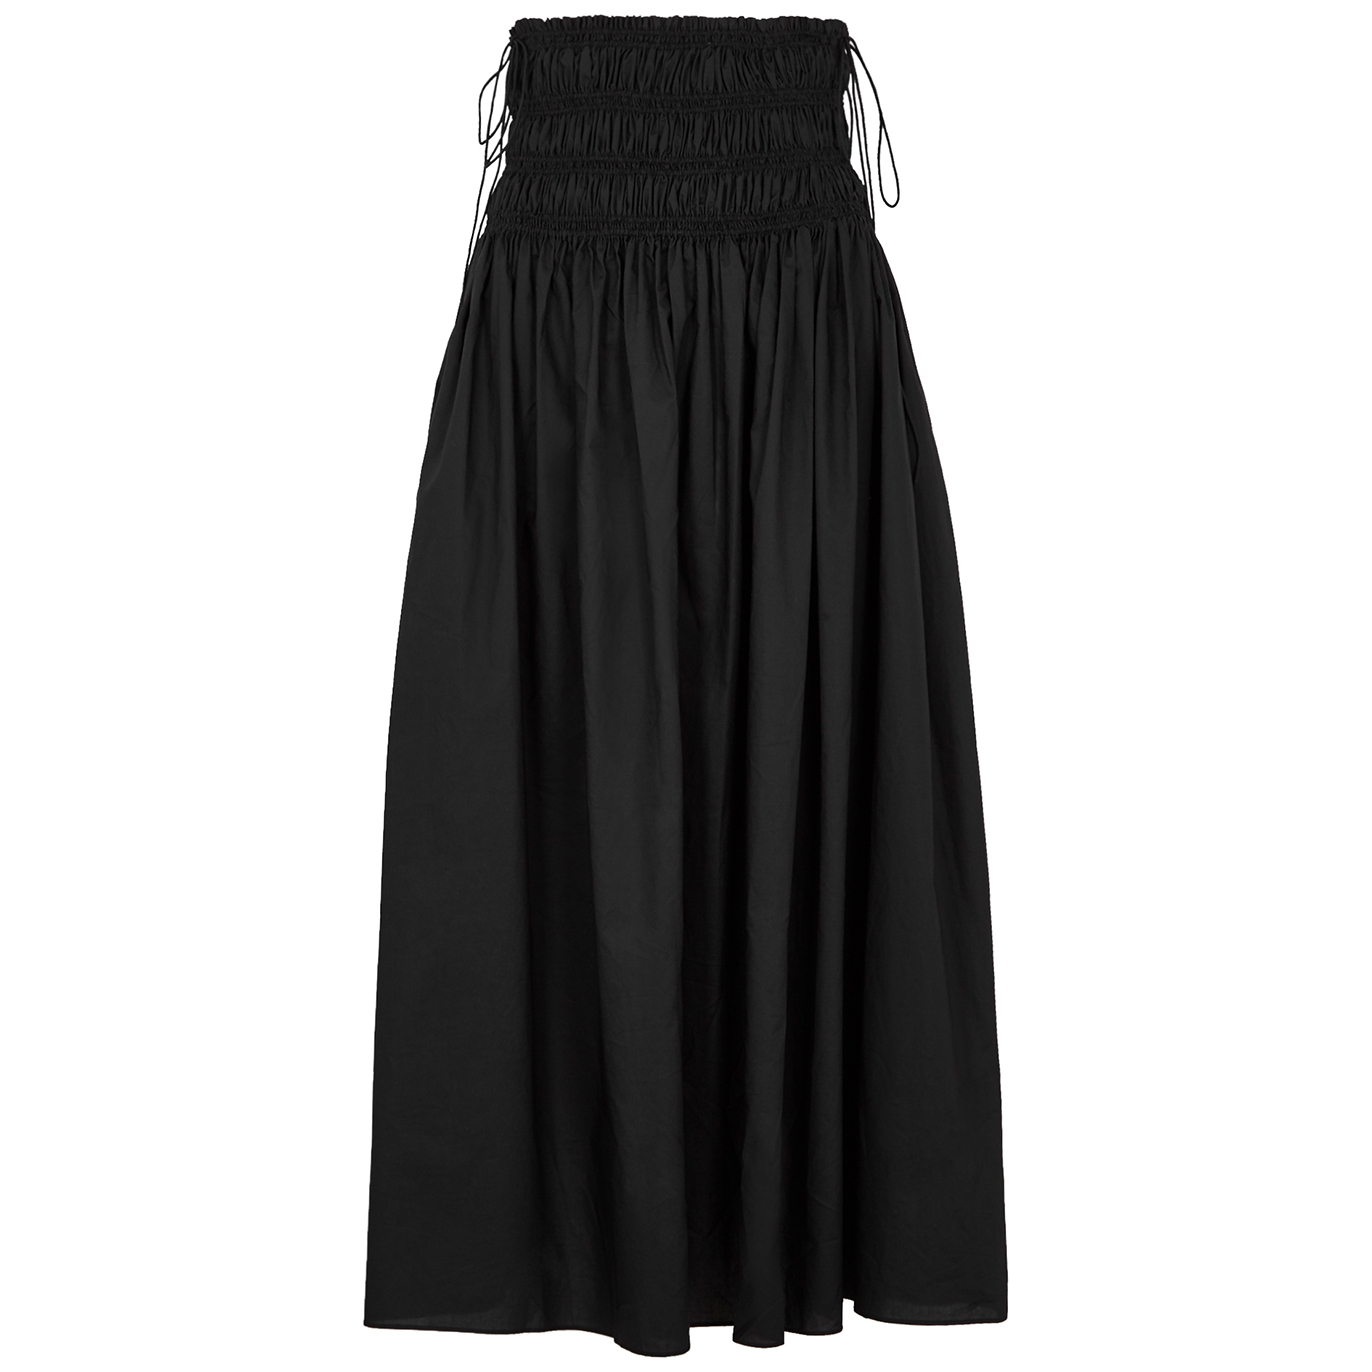 Matteau Black Smocked Cotton Maxi Skirt - 2